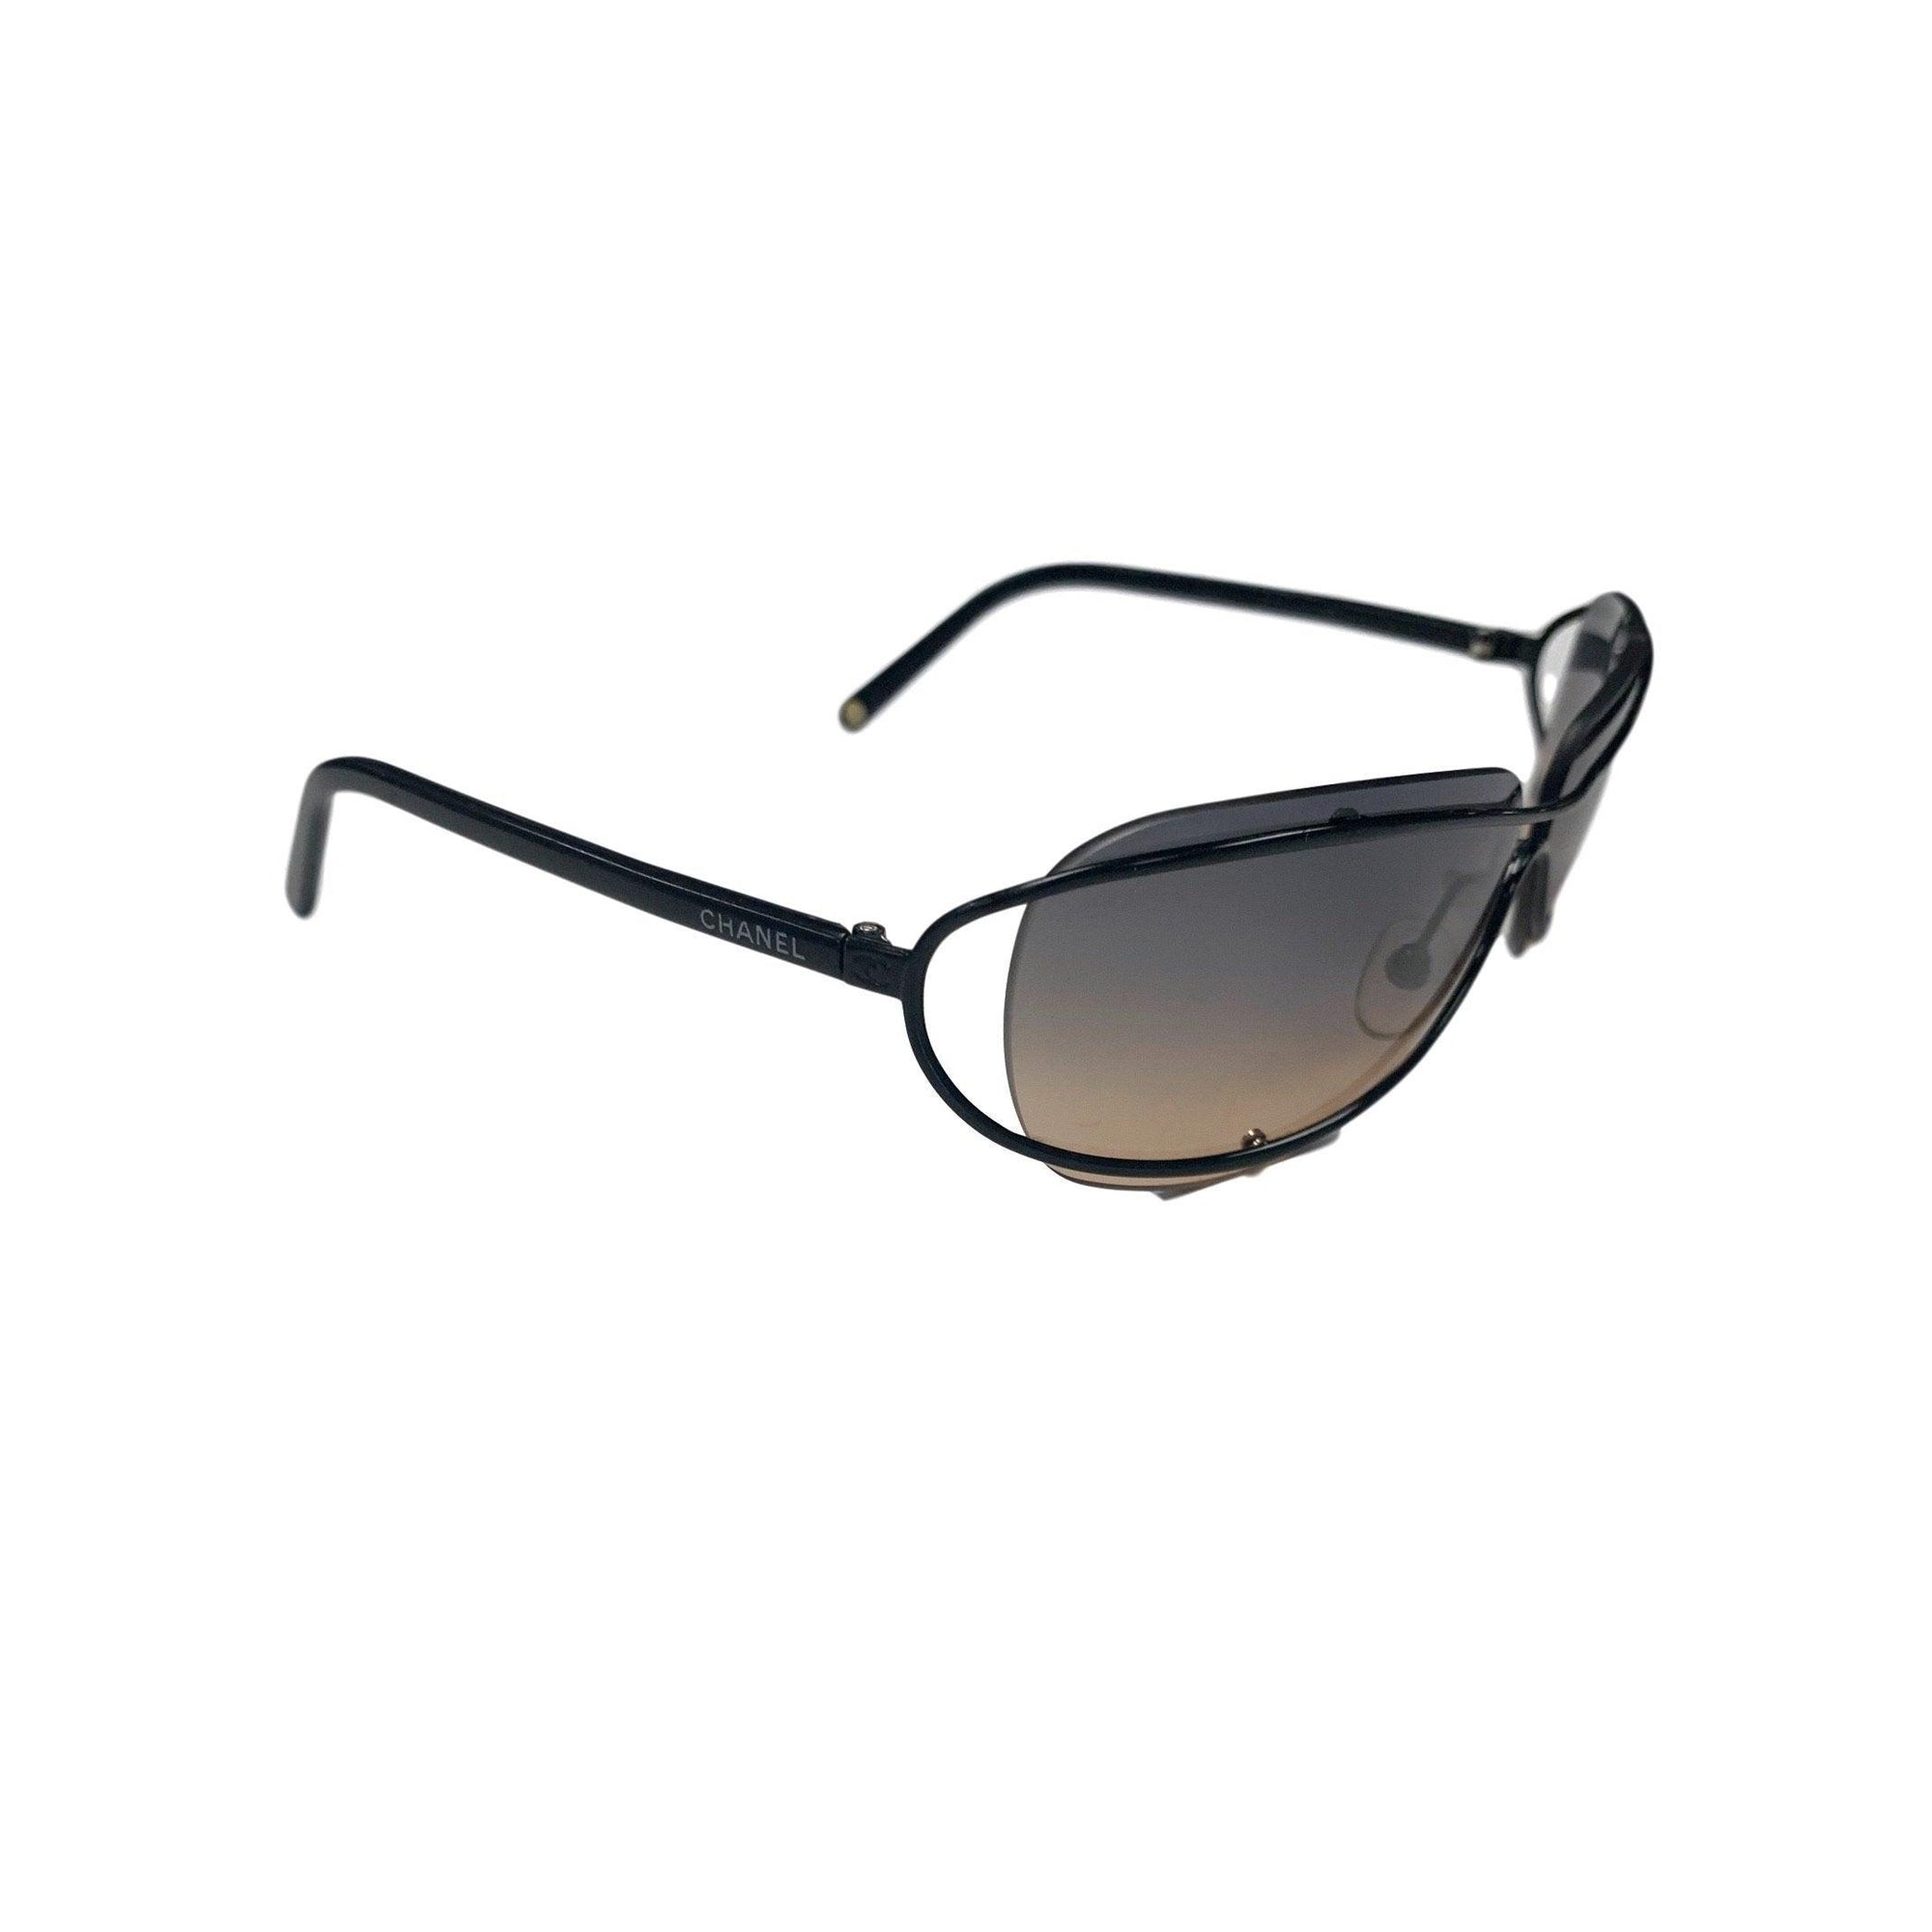 Chanel Black Metal Frame Sunglasses - Sunglasses